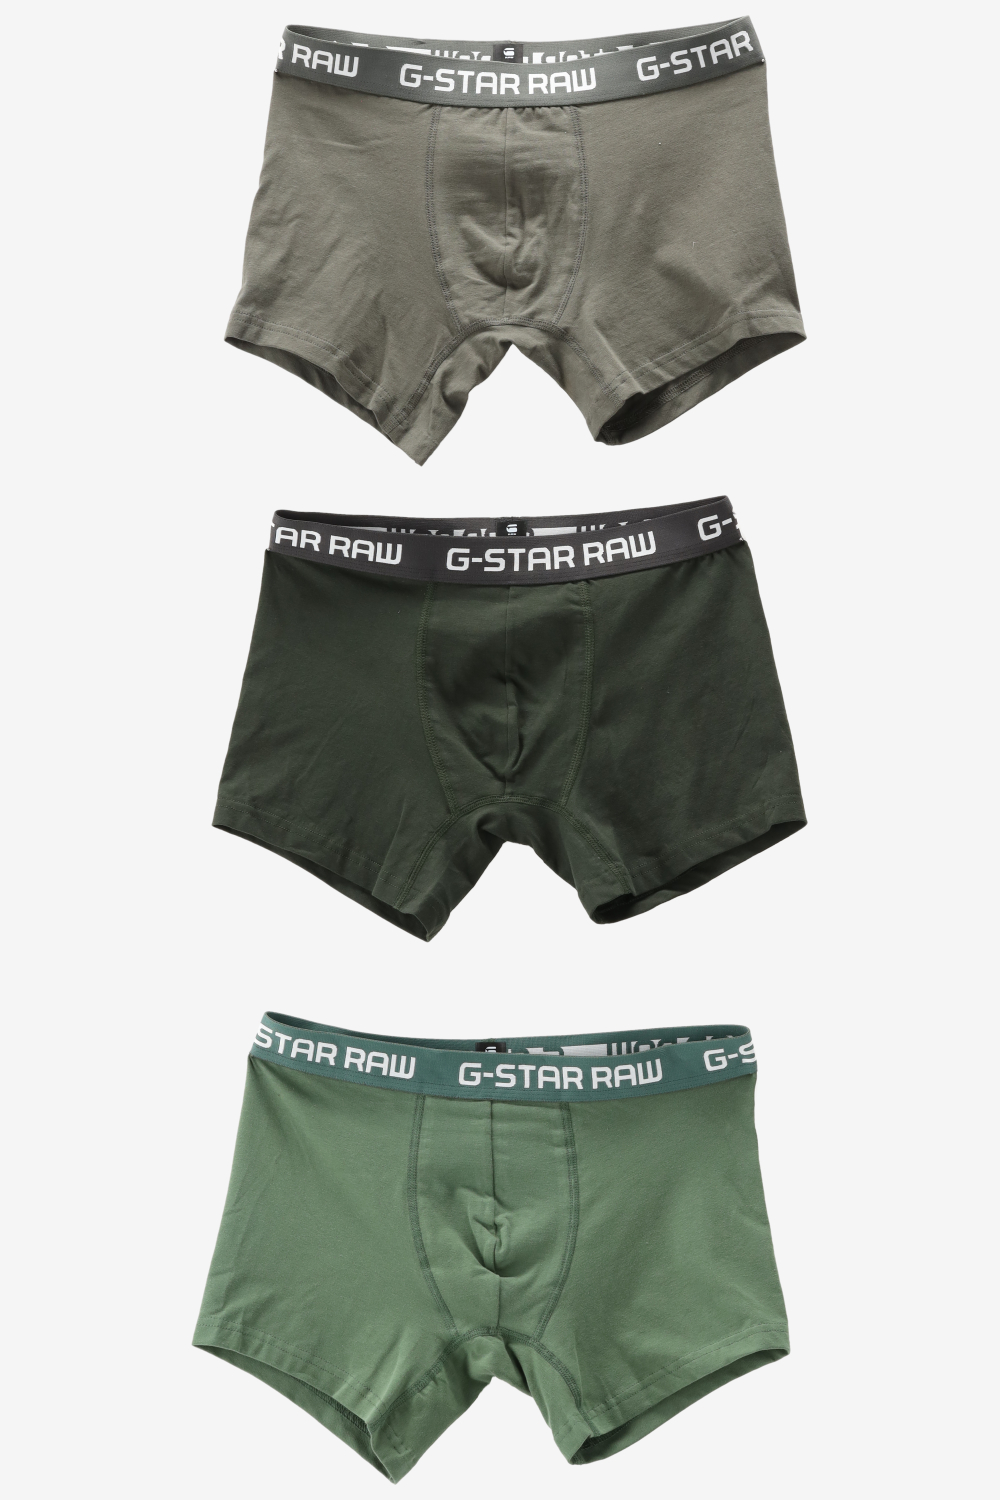 Dreigend Uitgebreid Vergelijkbaar Herenkleding Accessoires G-Star Underwear Classic 3 pack - Bergmans Fashion  Outlet - Webshop | GRATIS VERZENDING!